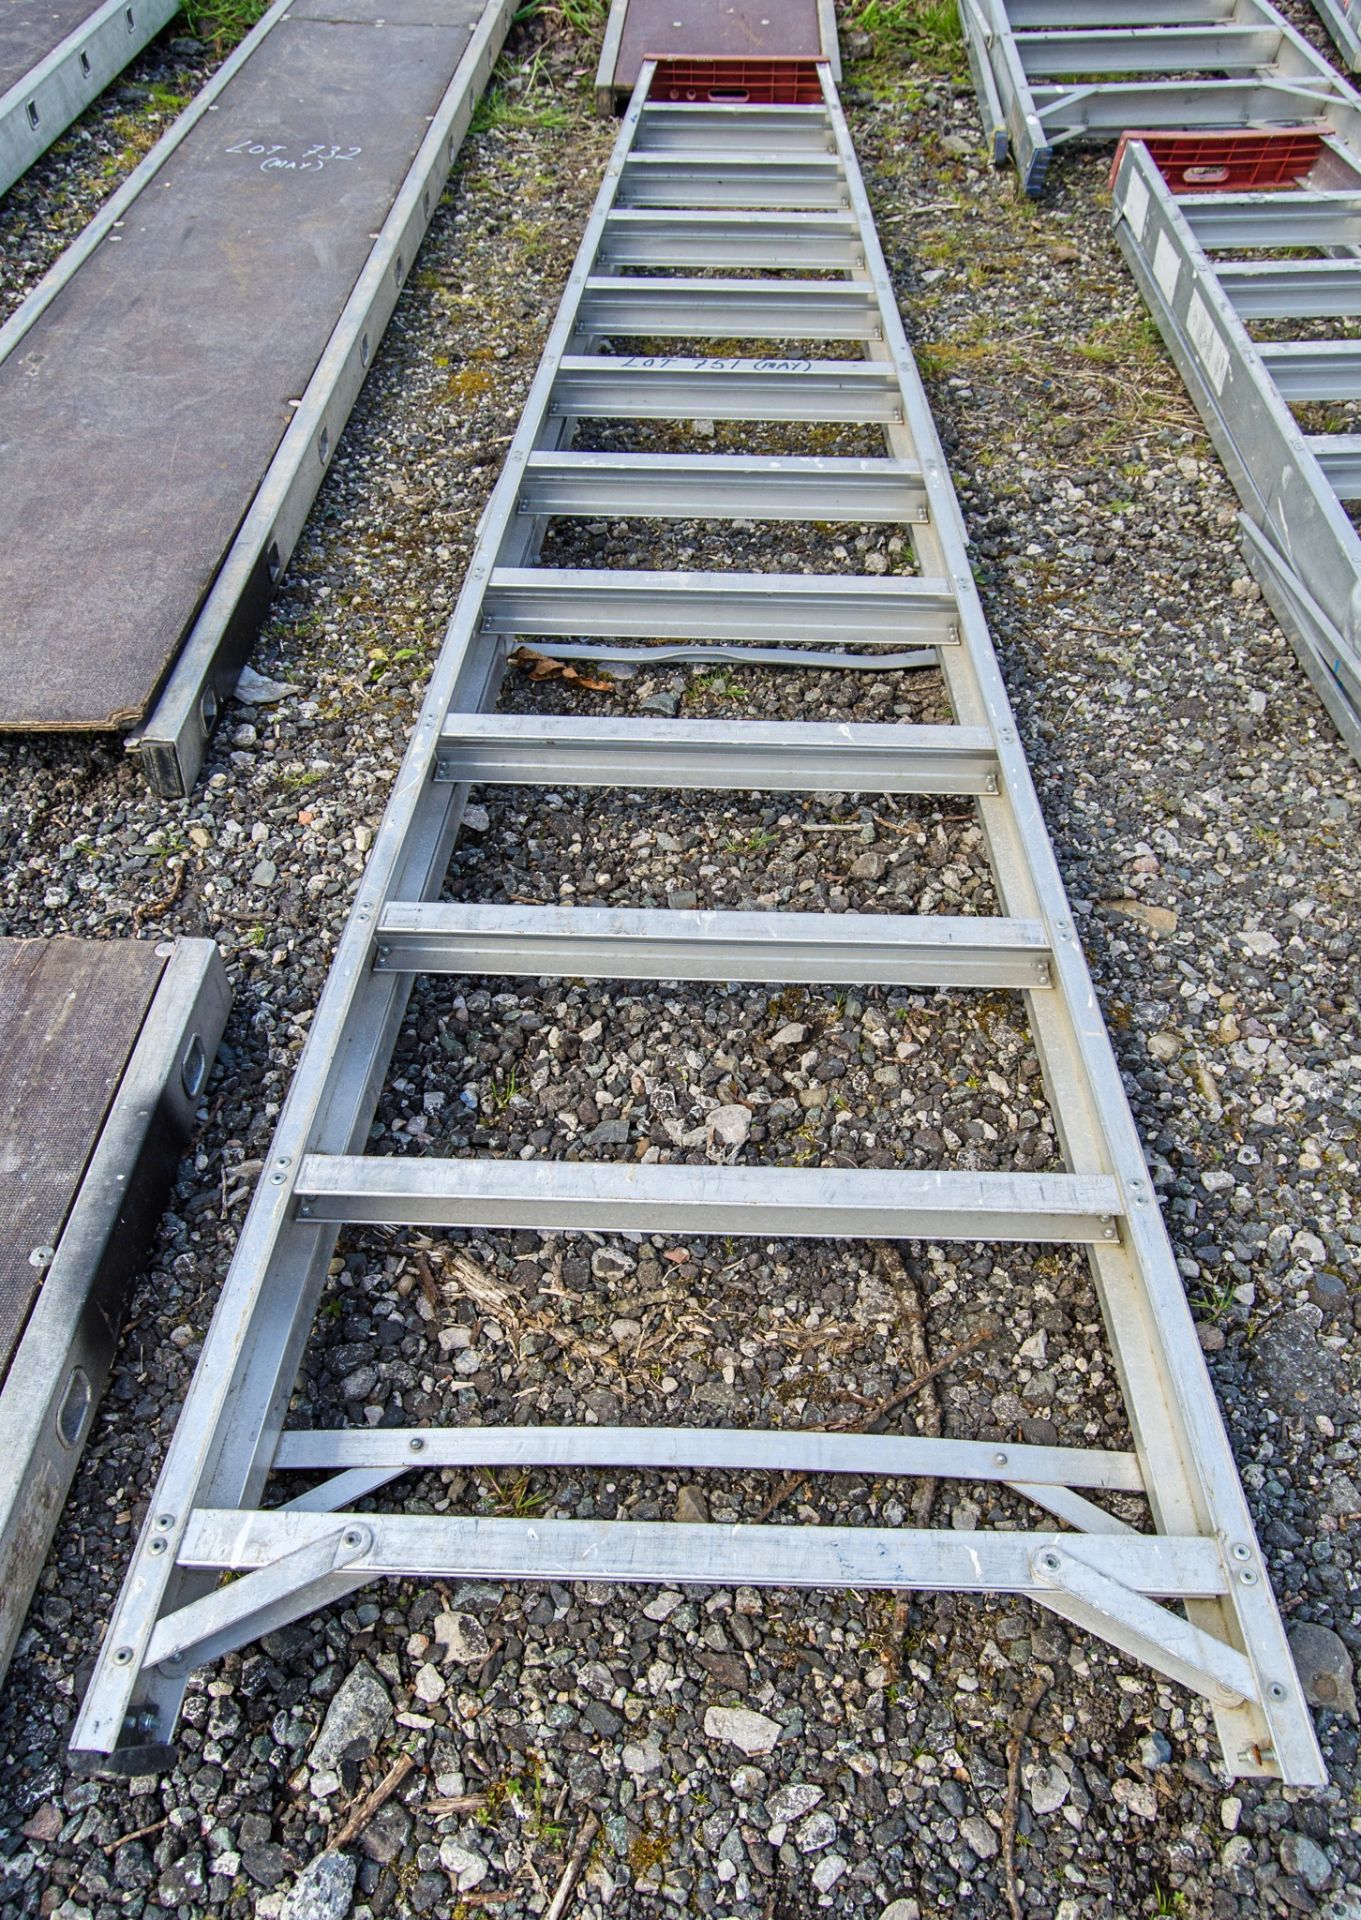 12 tread aluminium step ladder 1901LYT0975